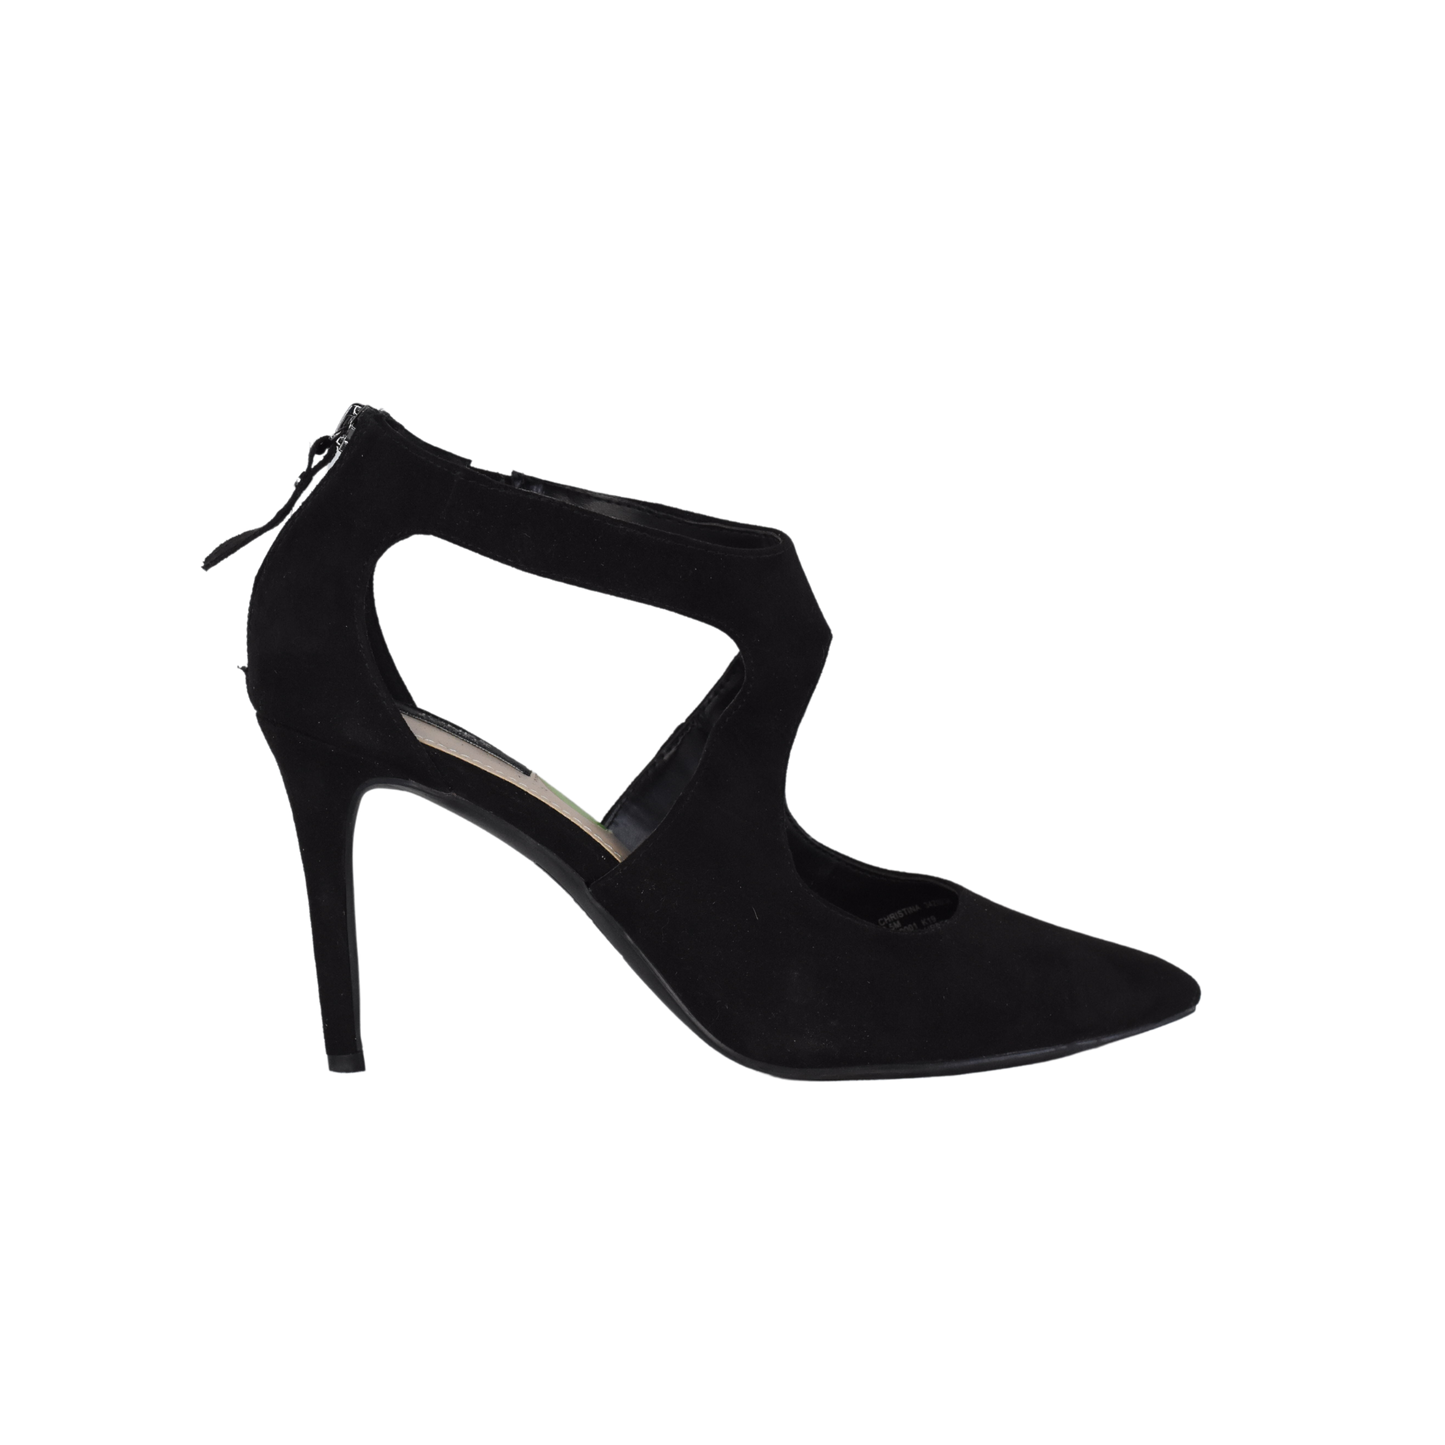 Jones New York High Heel Black Size 9.5 SKU 000131-3